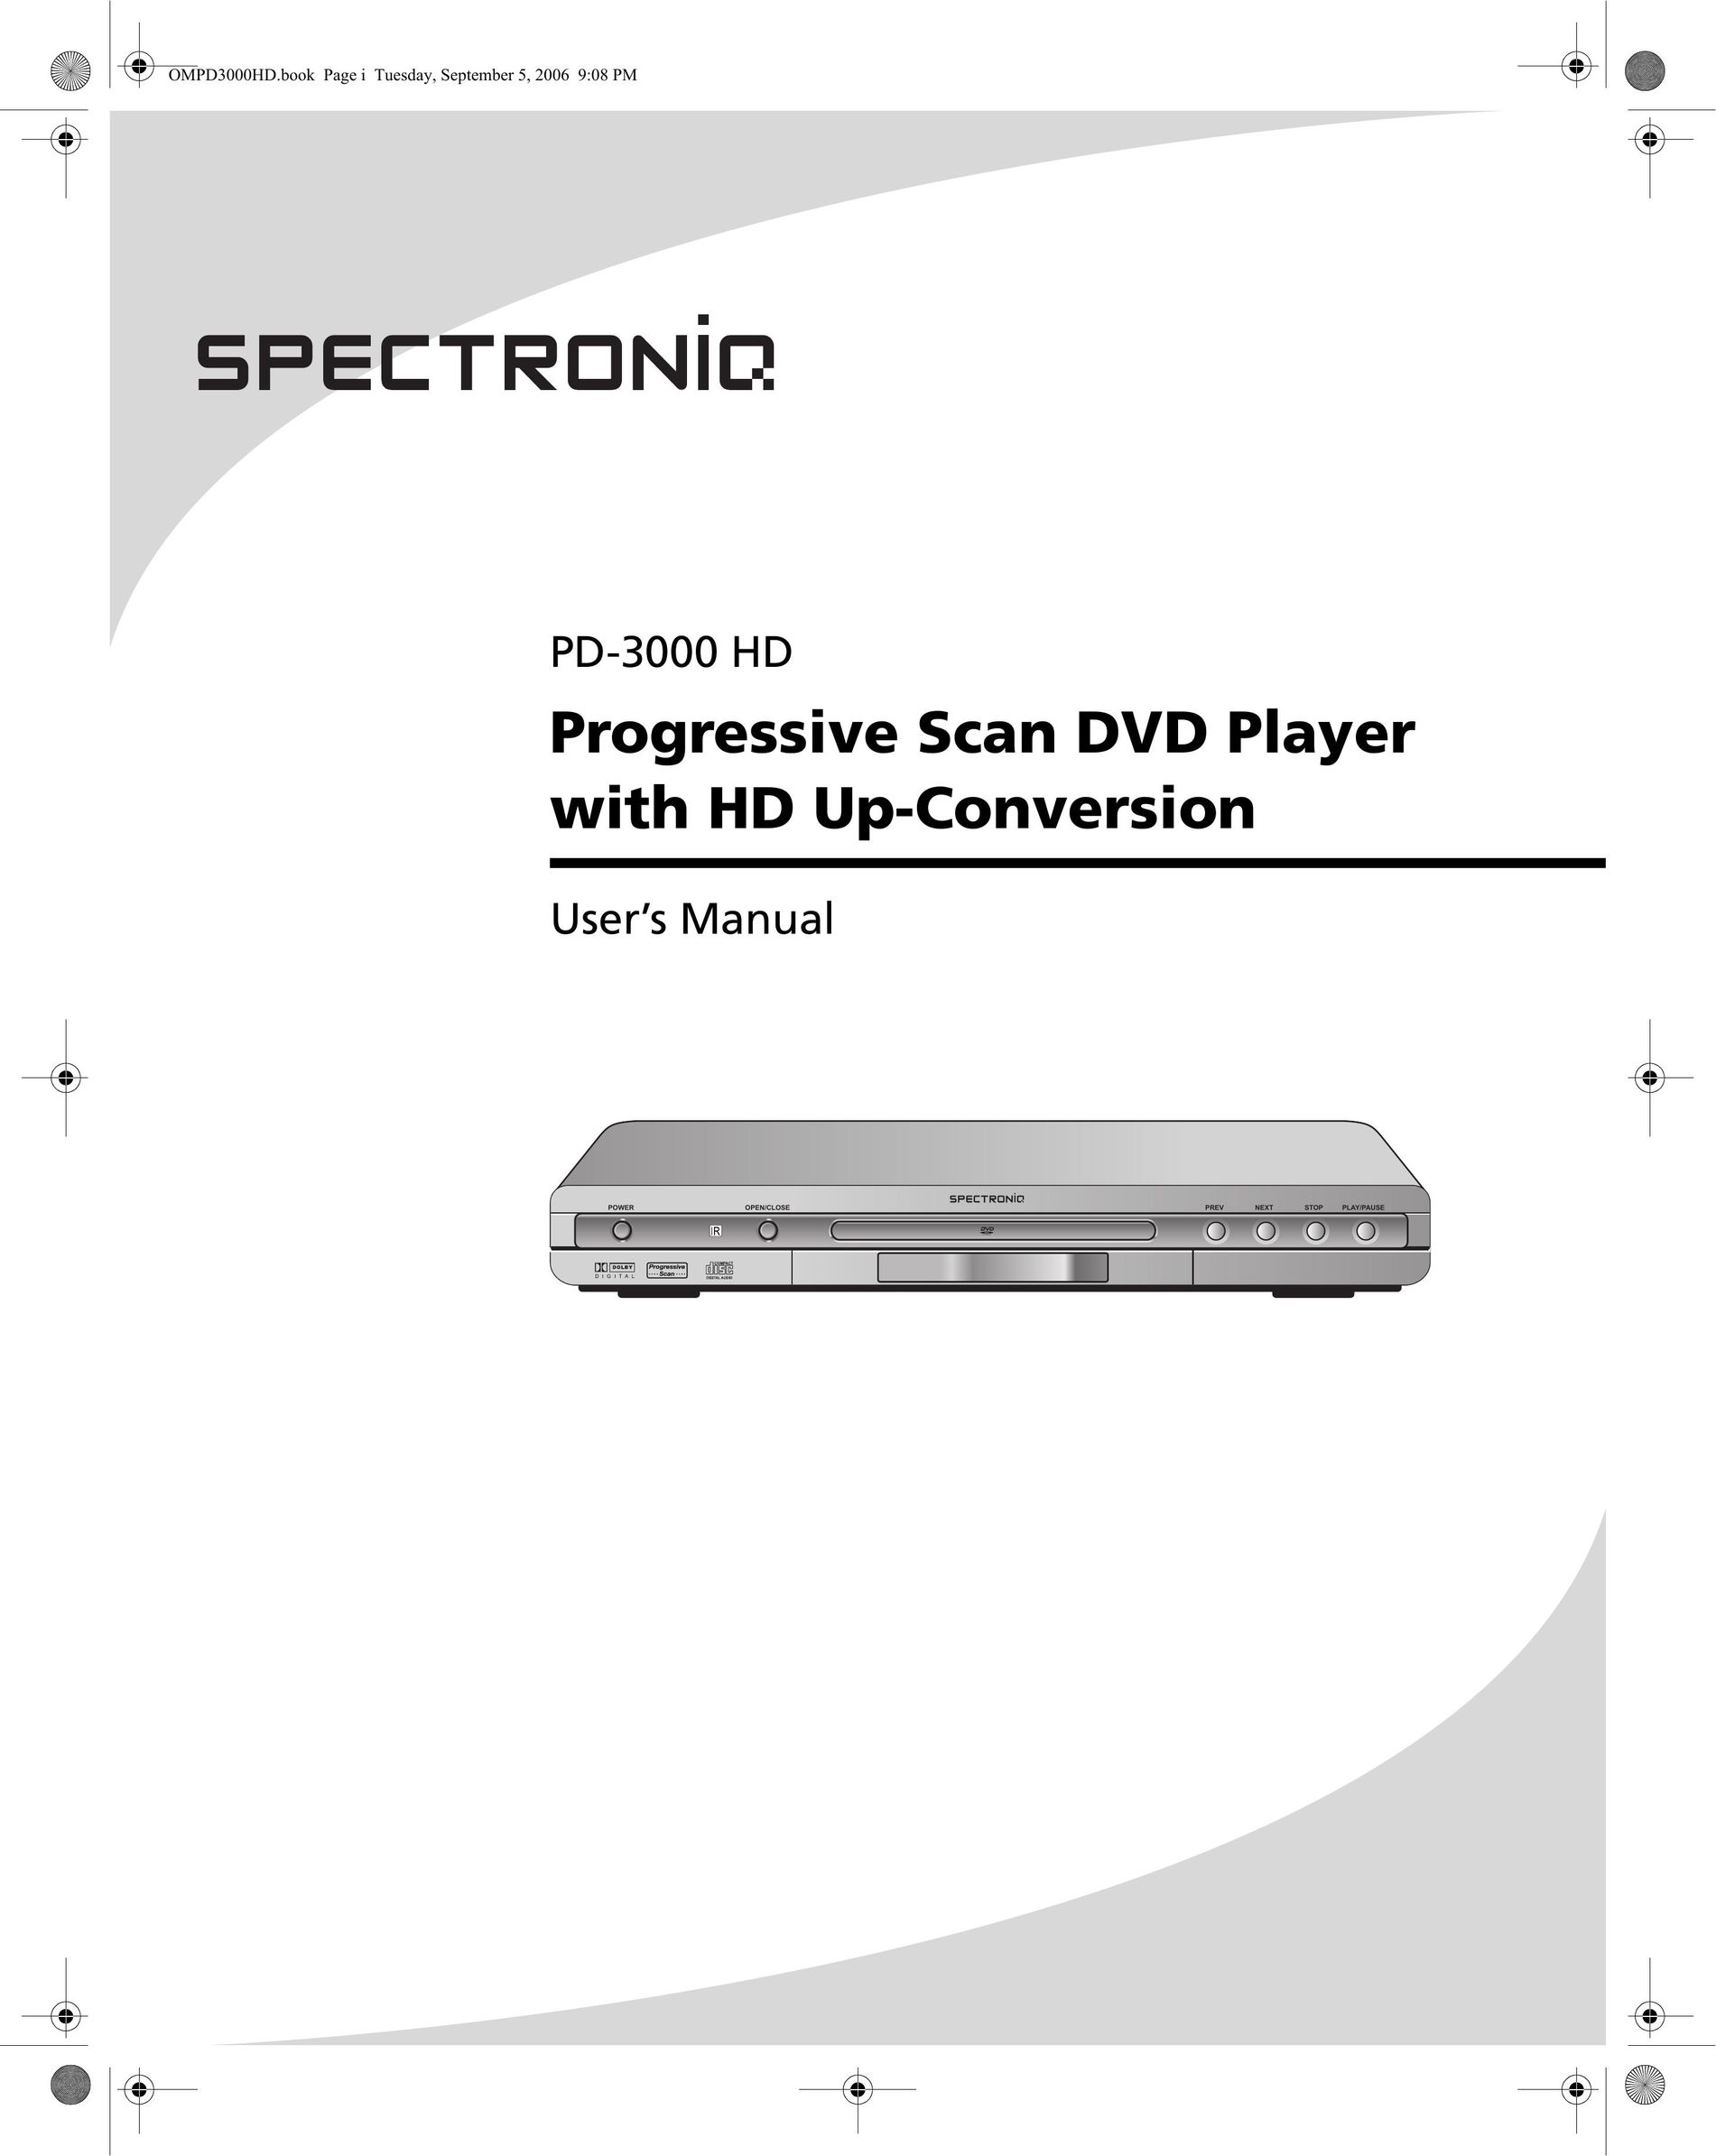 SpectronIQ PD-3000HD DVD Player User Manual